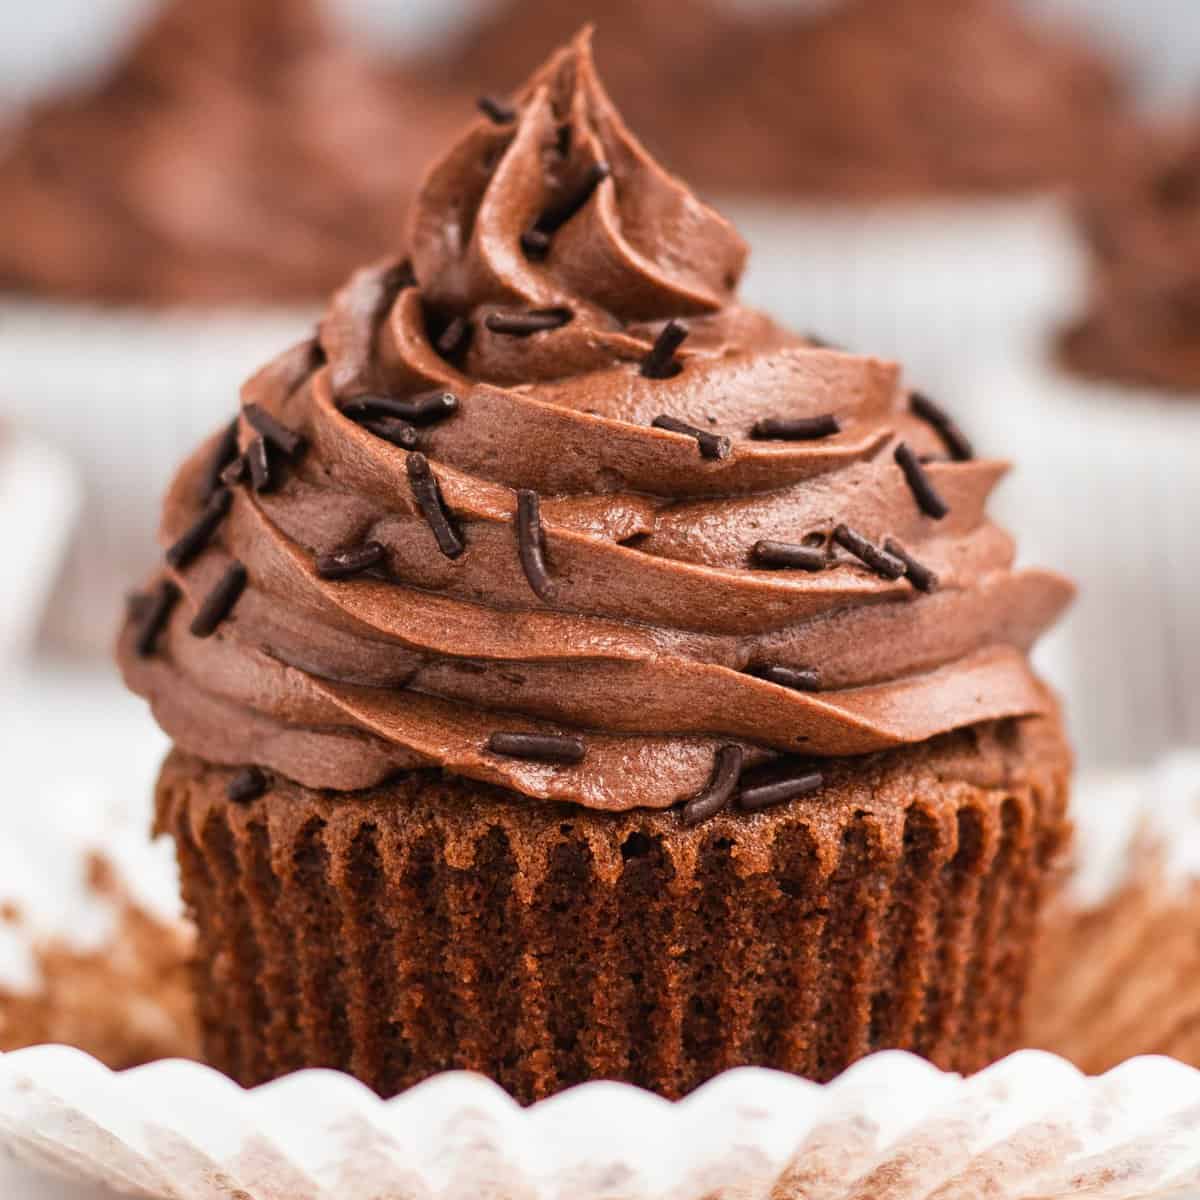 Homemade Chocolate Cupcakes